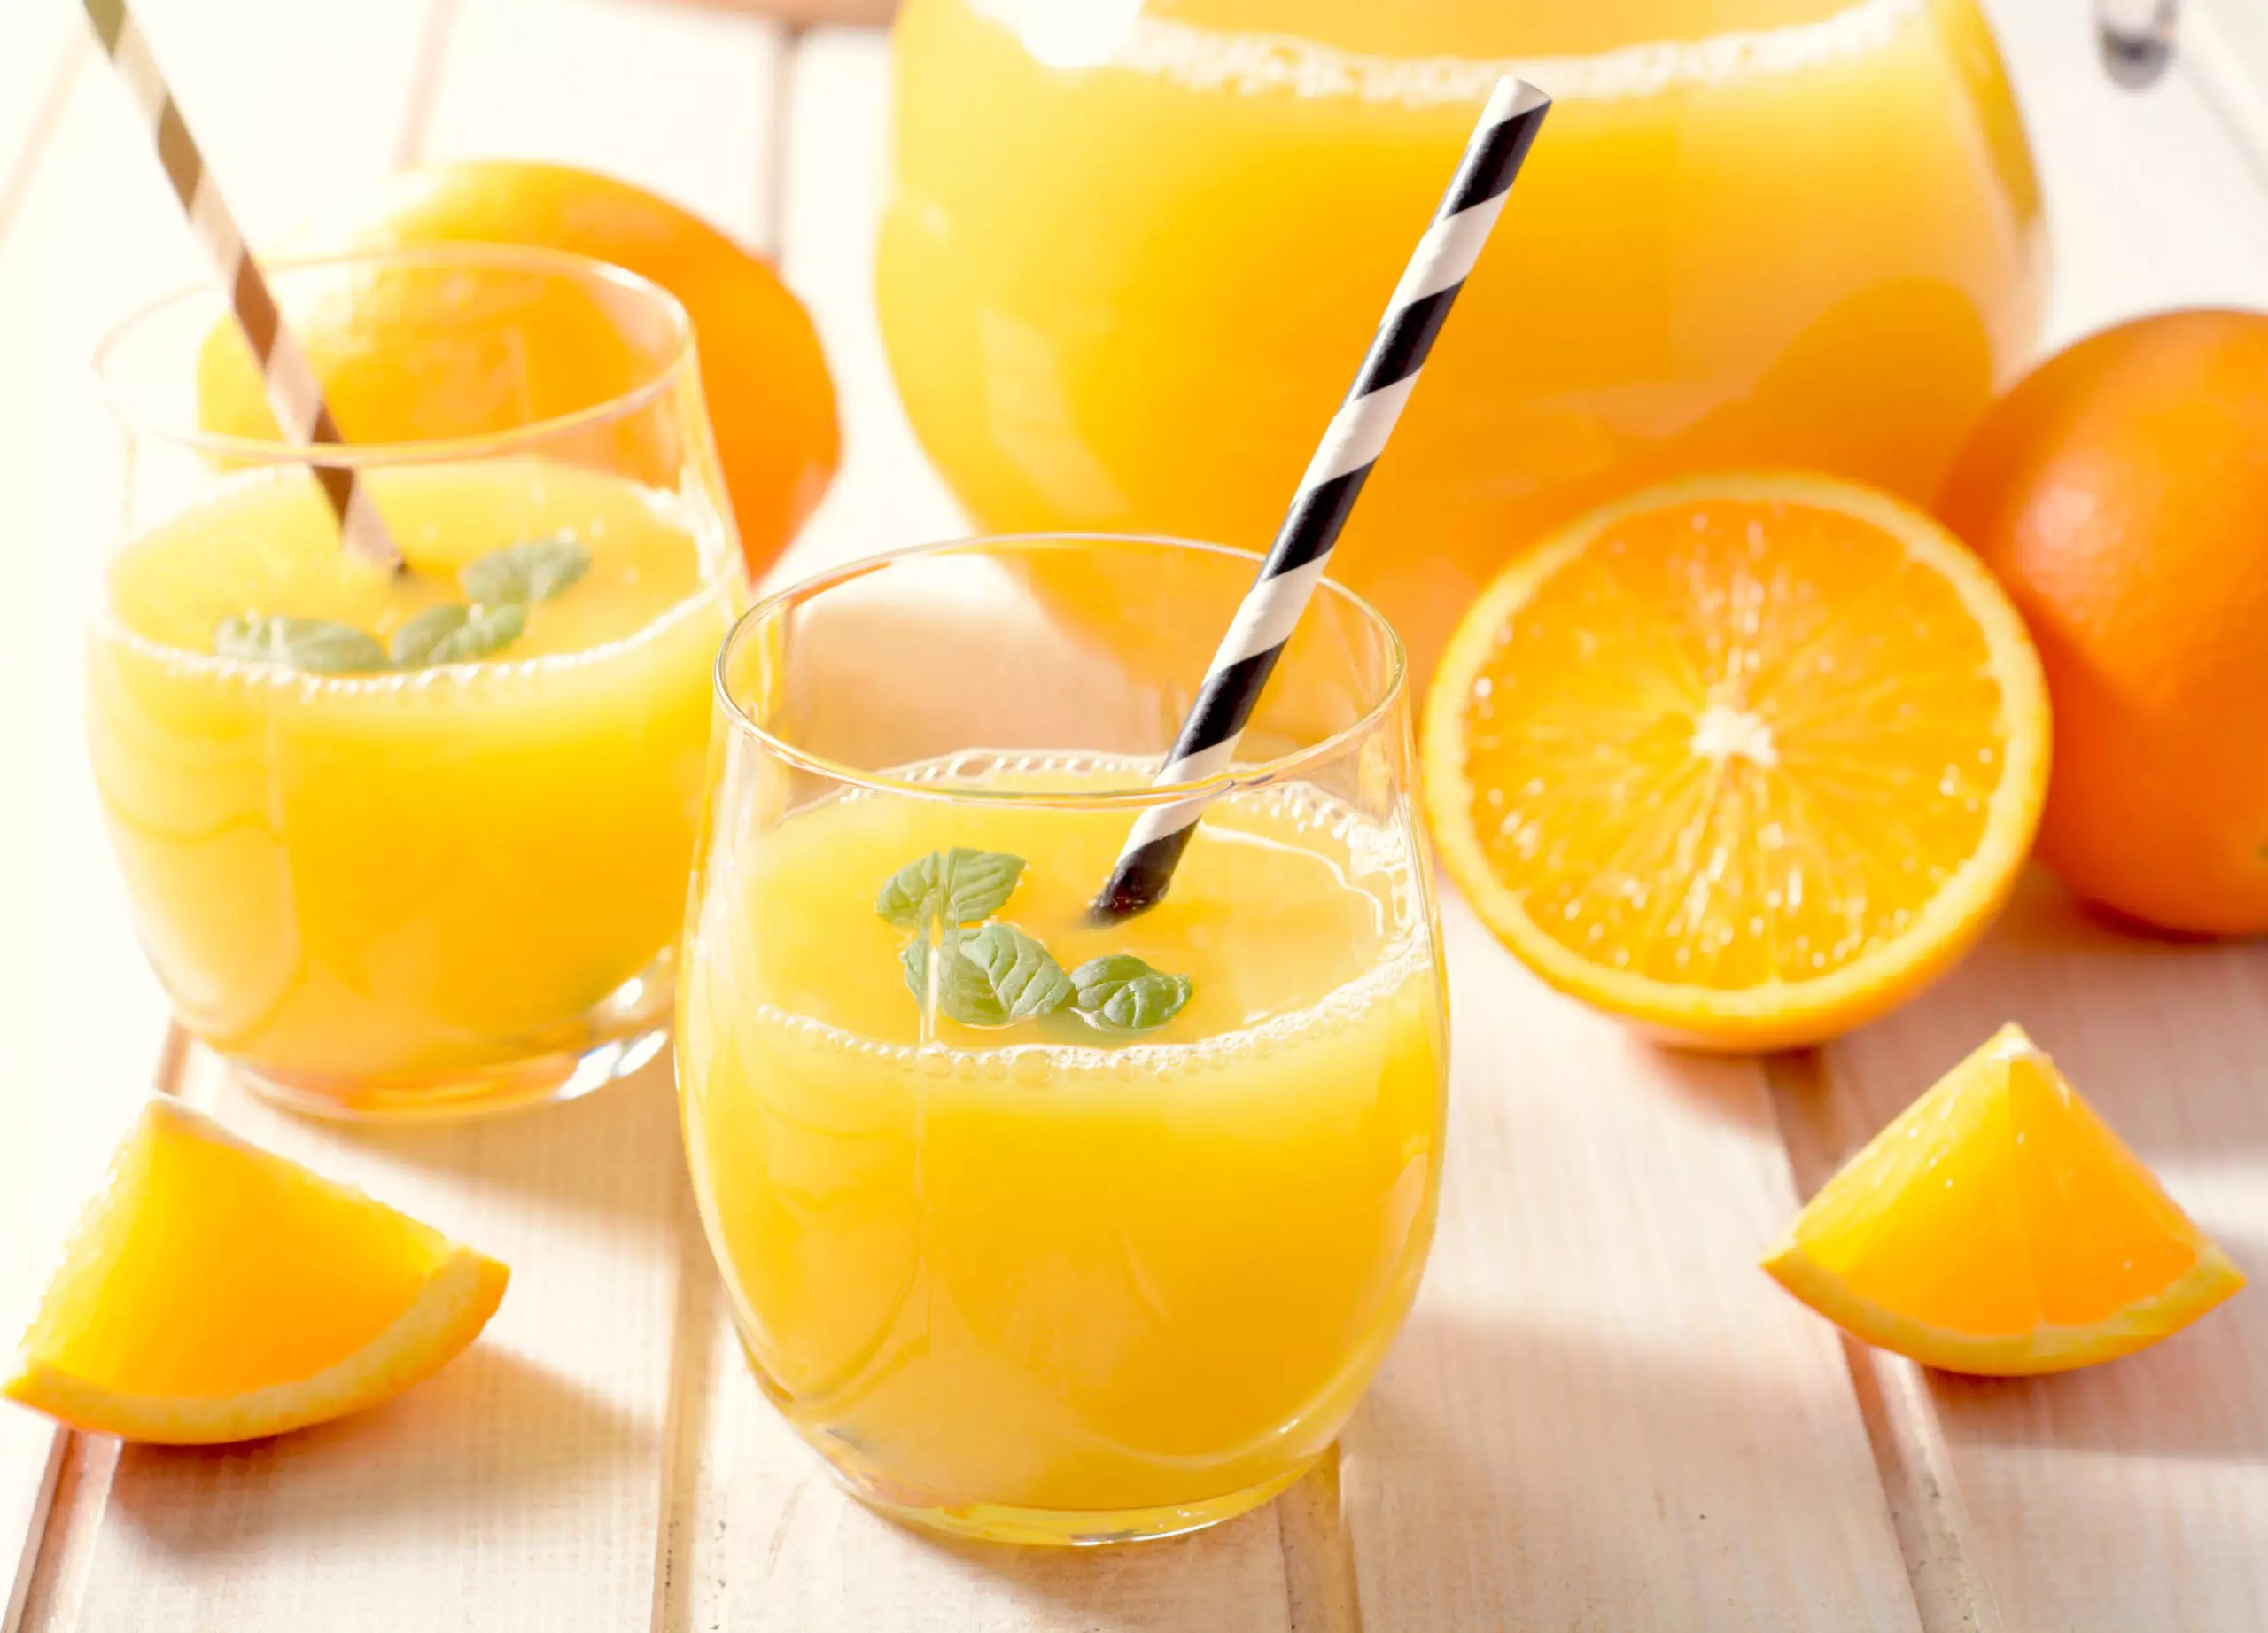 Fresh orange juice in glasses with mint garnish.